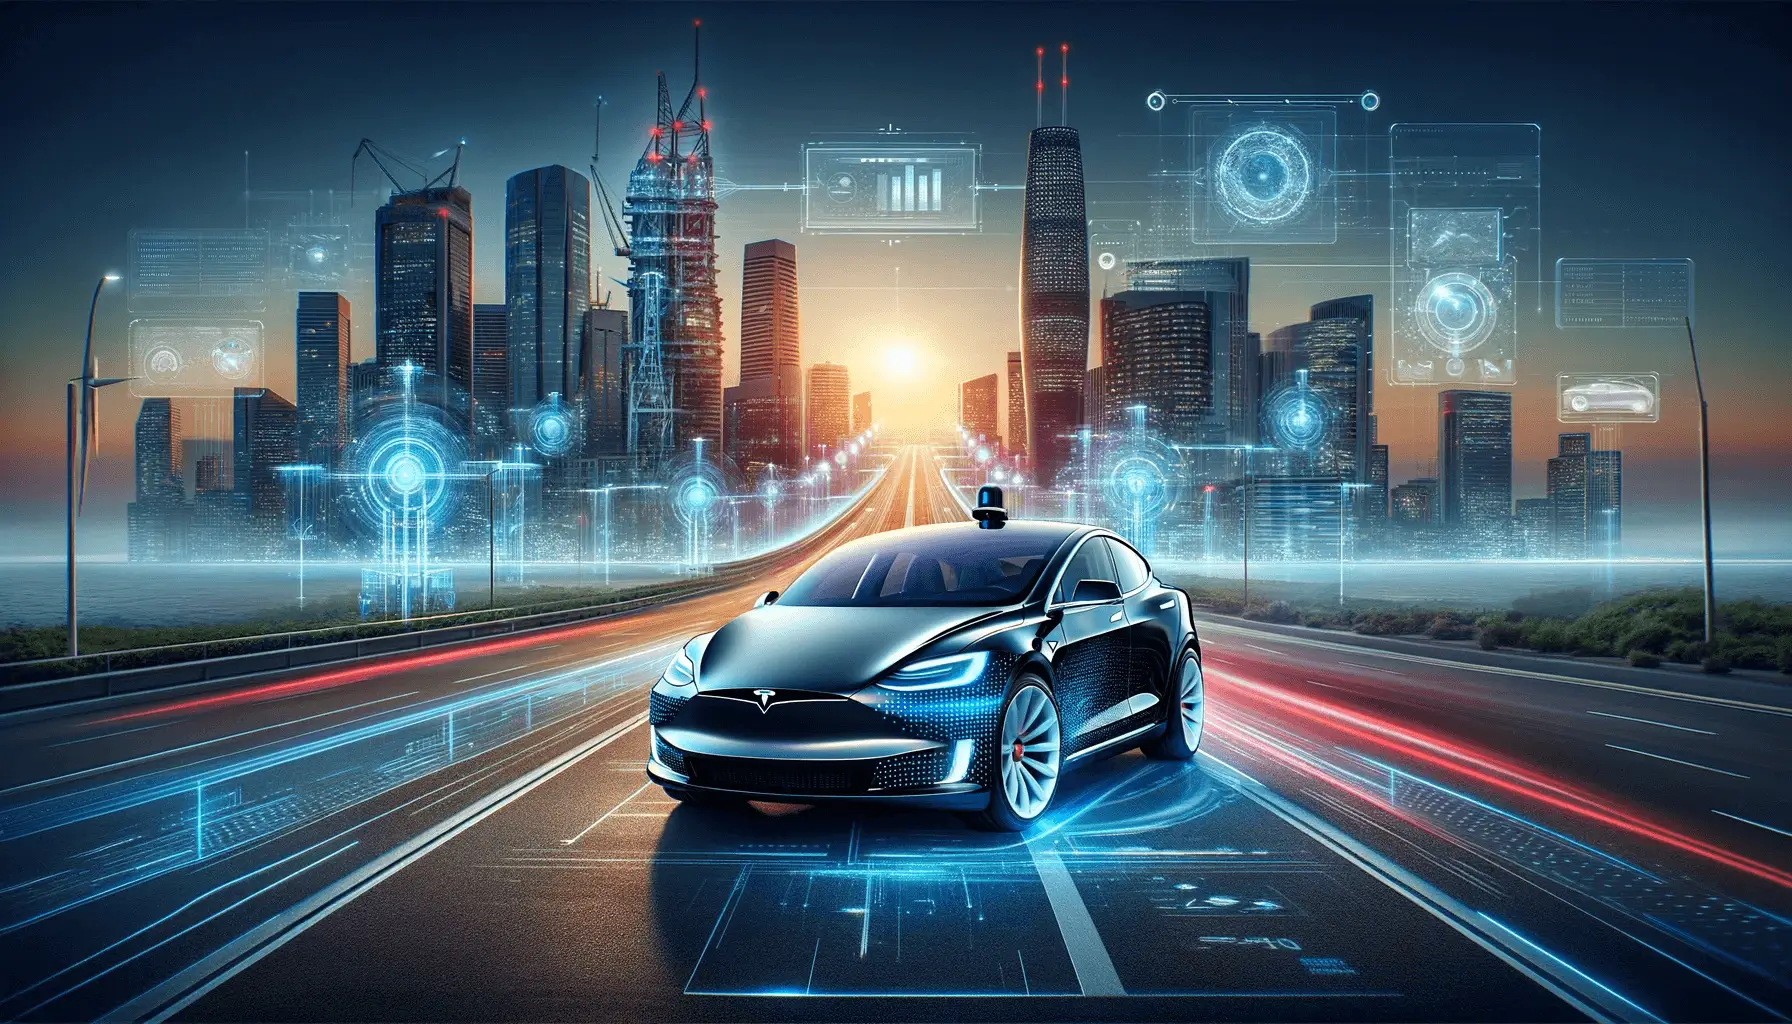 A Tesla car driving on a digitally enhanced road at dusk, showcasing the futuristic Full Self-Driving technology amid a modern cityscape.